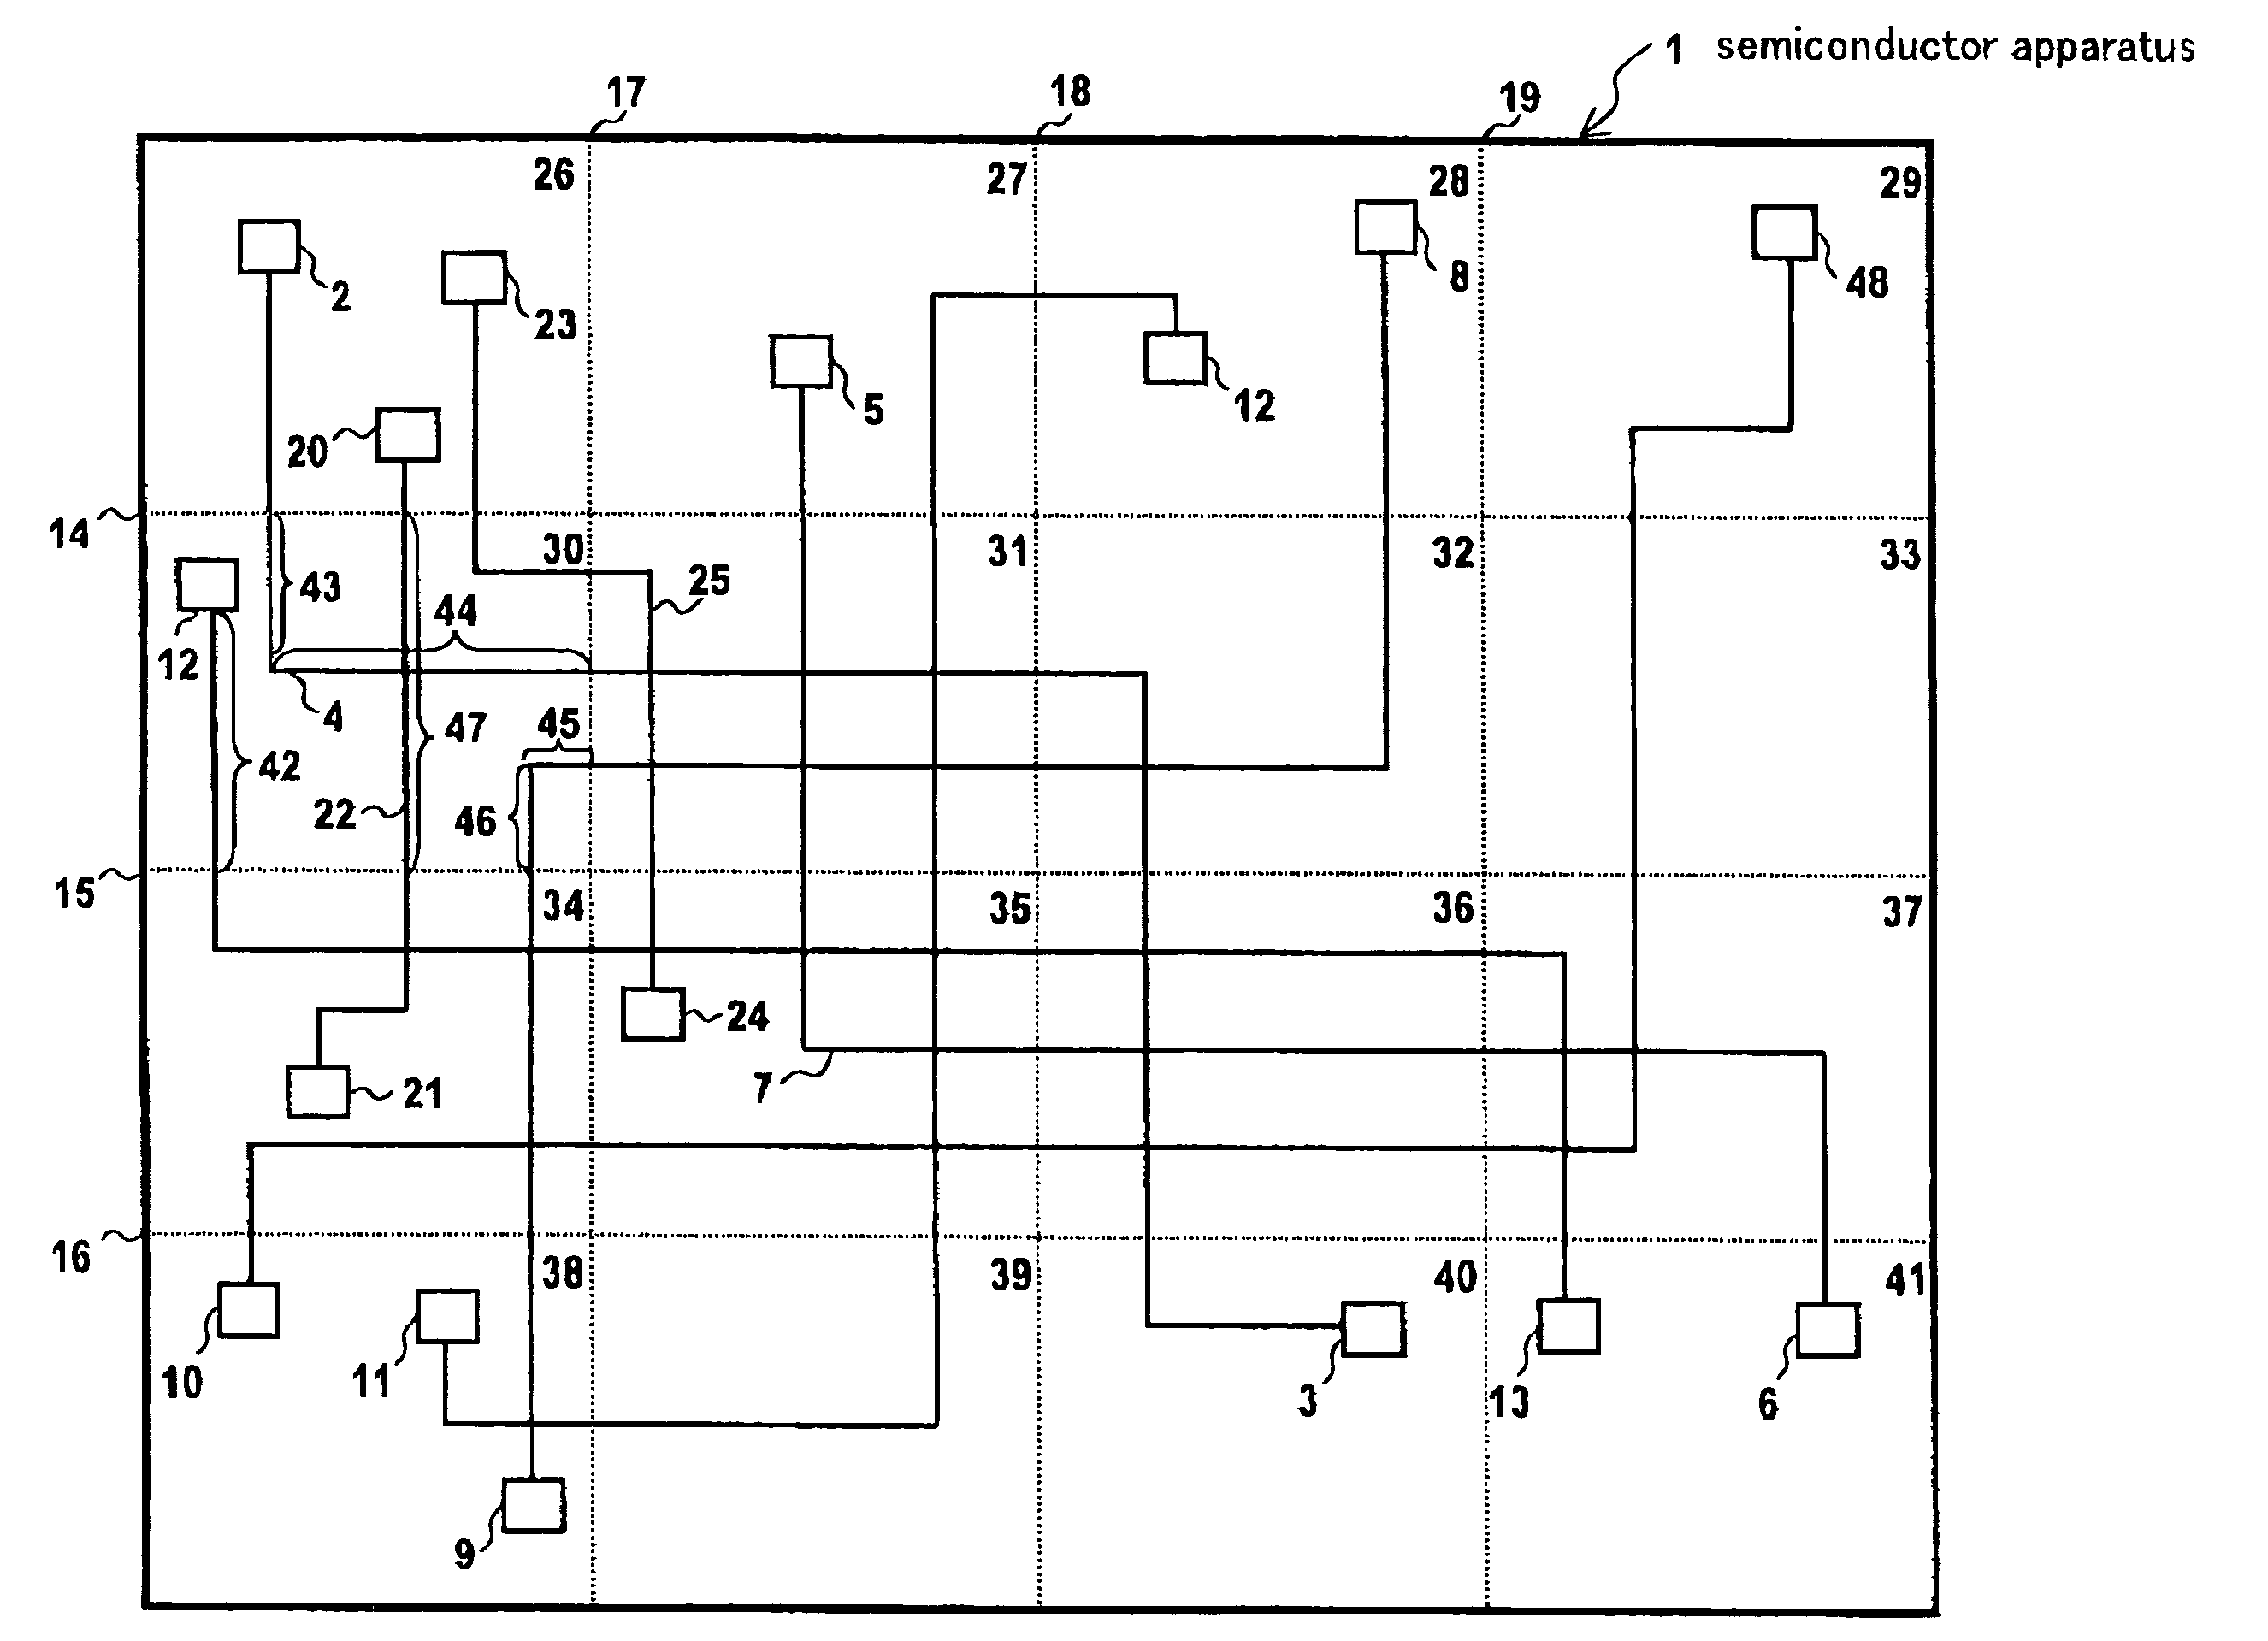 Method of testing semiconductor apparatus